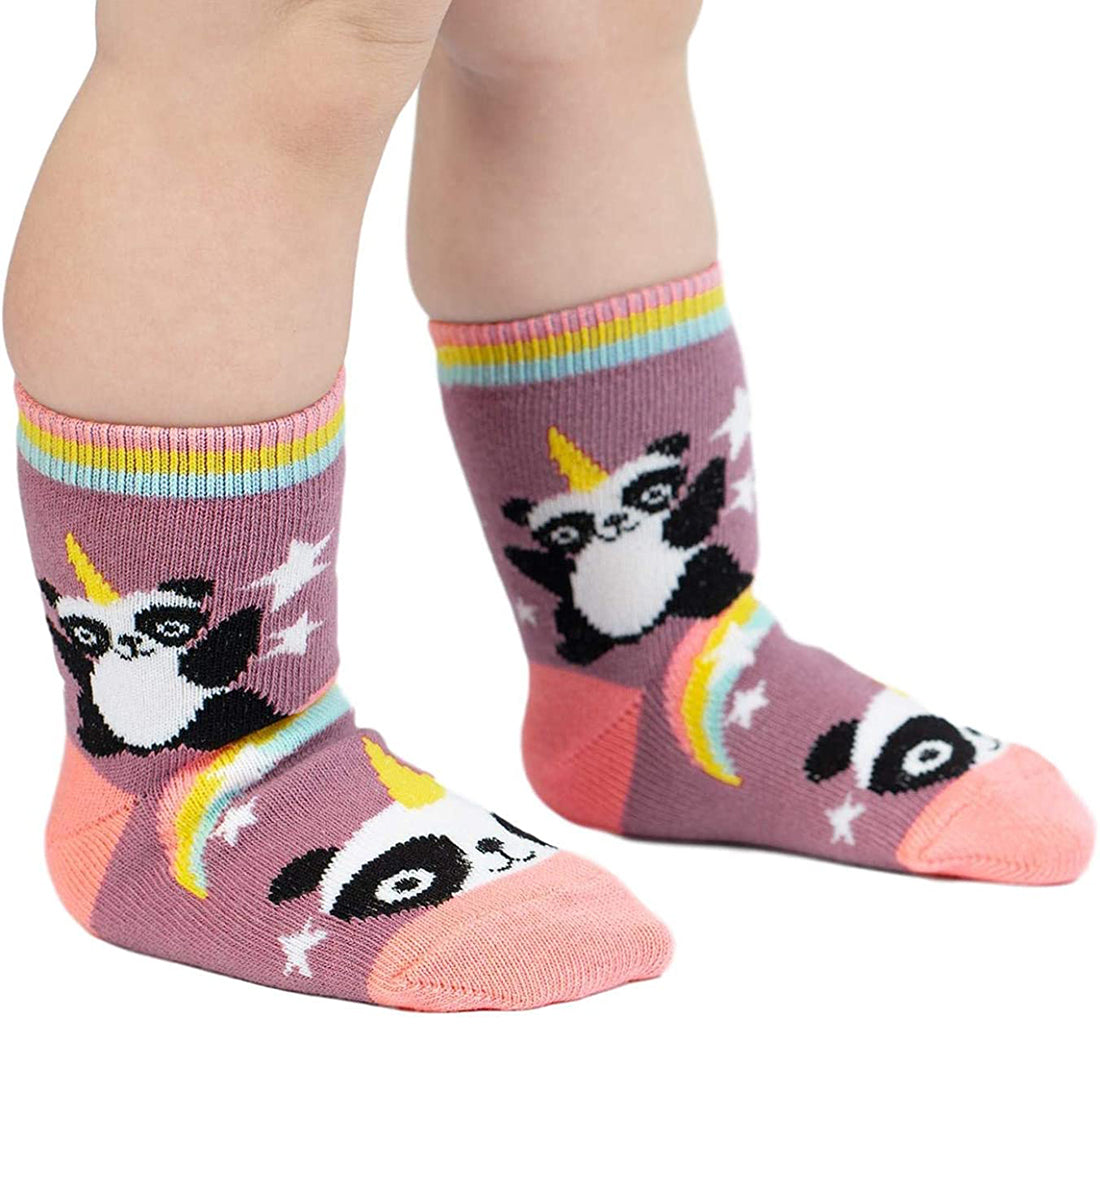 SOCK it to me Toddler Crew Socks (tc0091),Pandacorn - Pandacorn,One Size